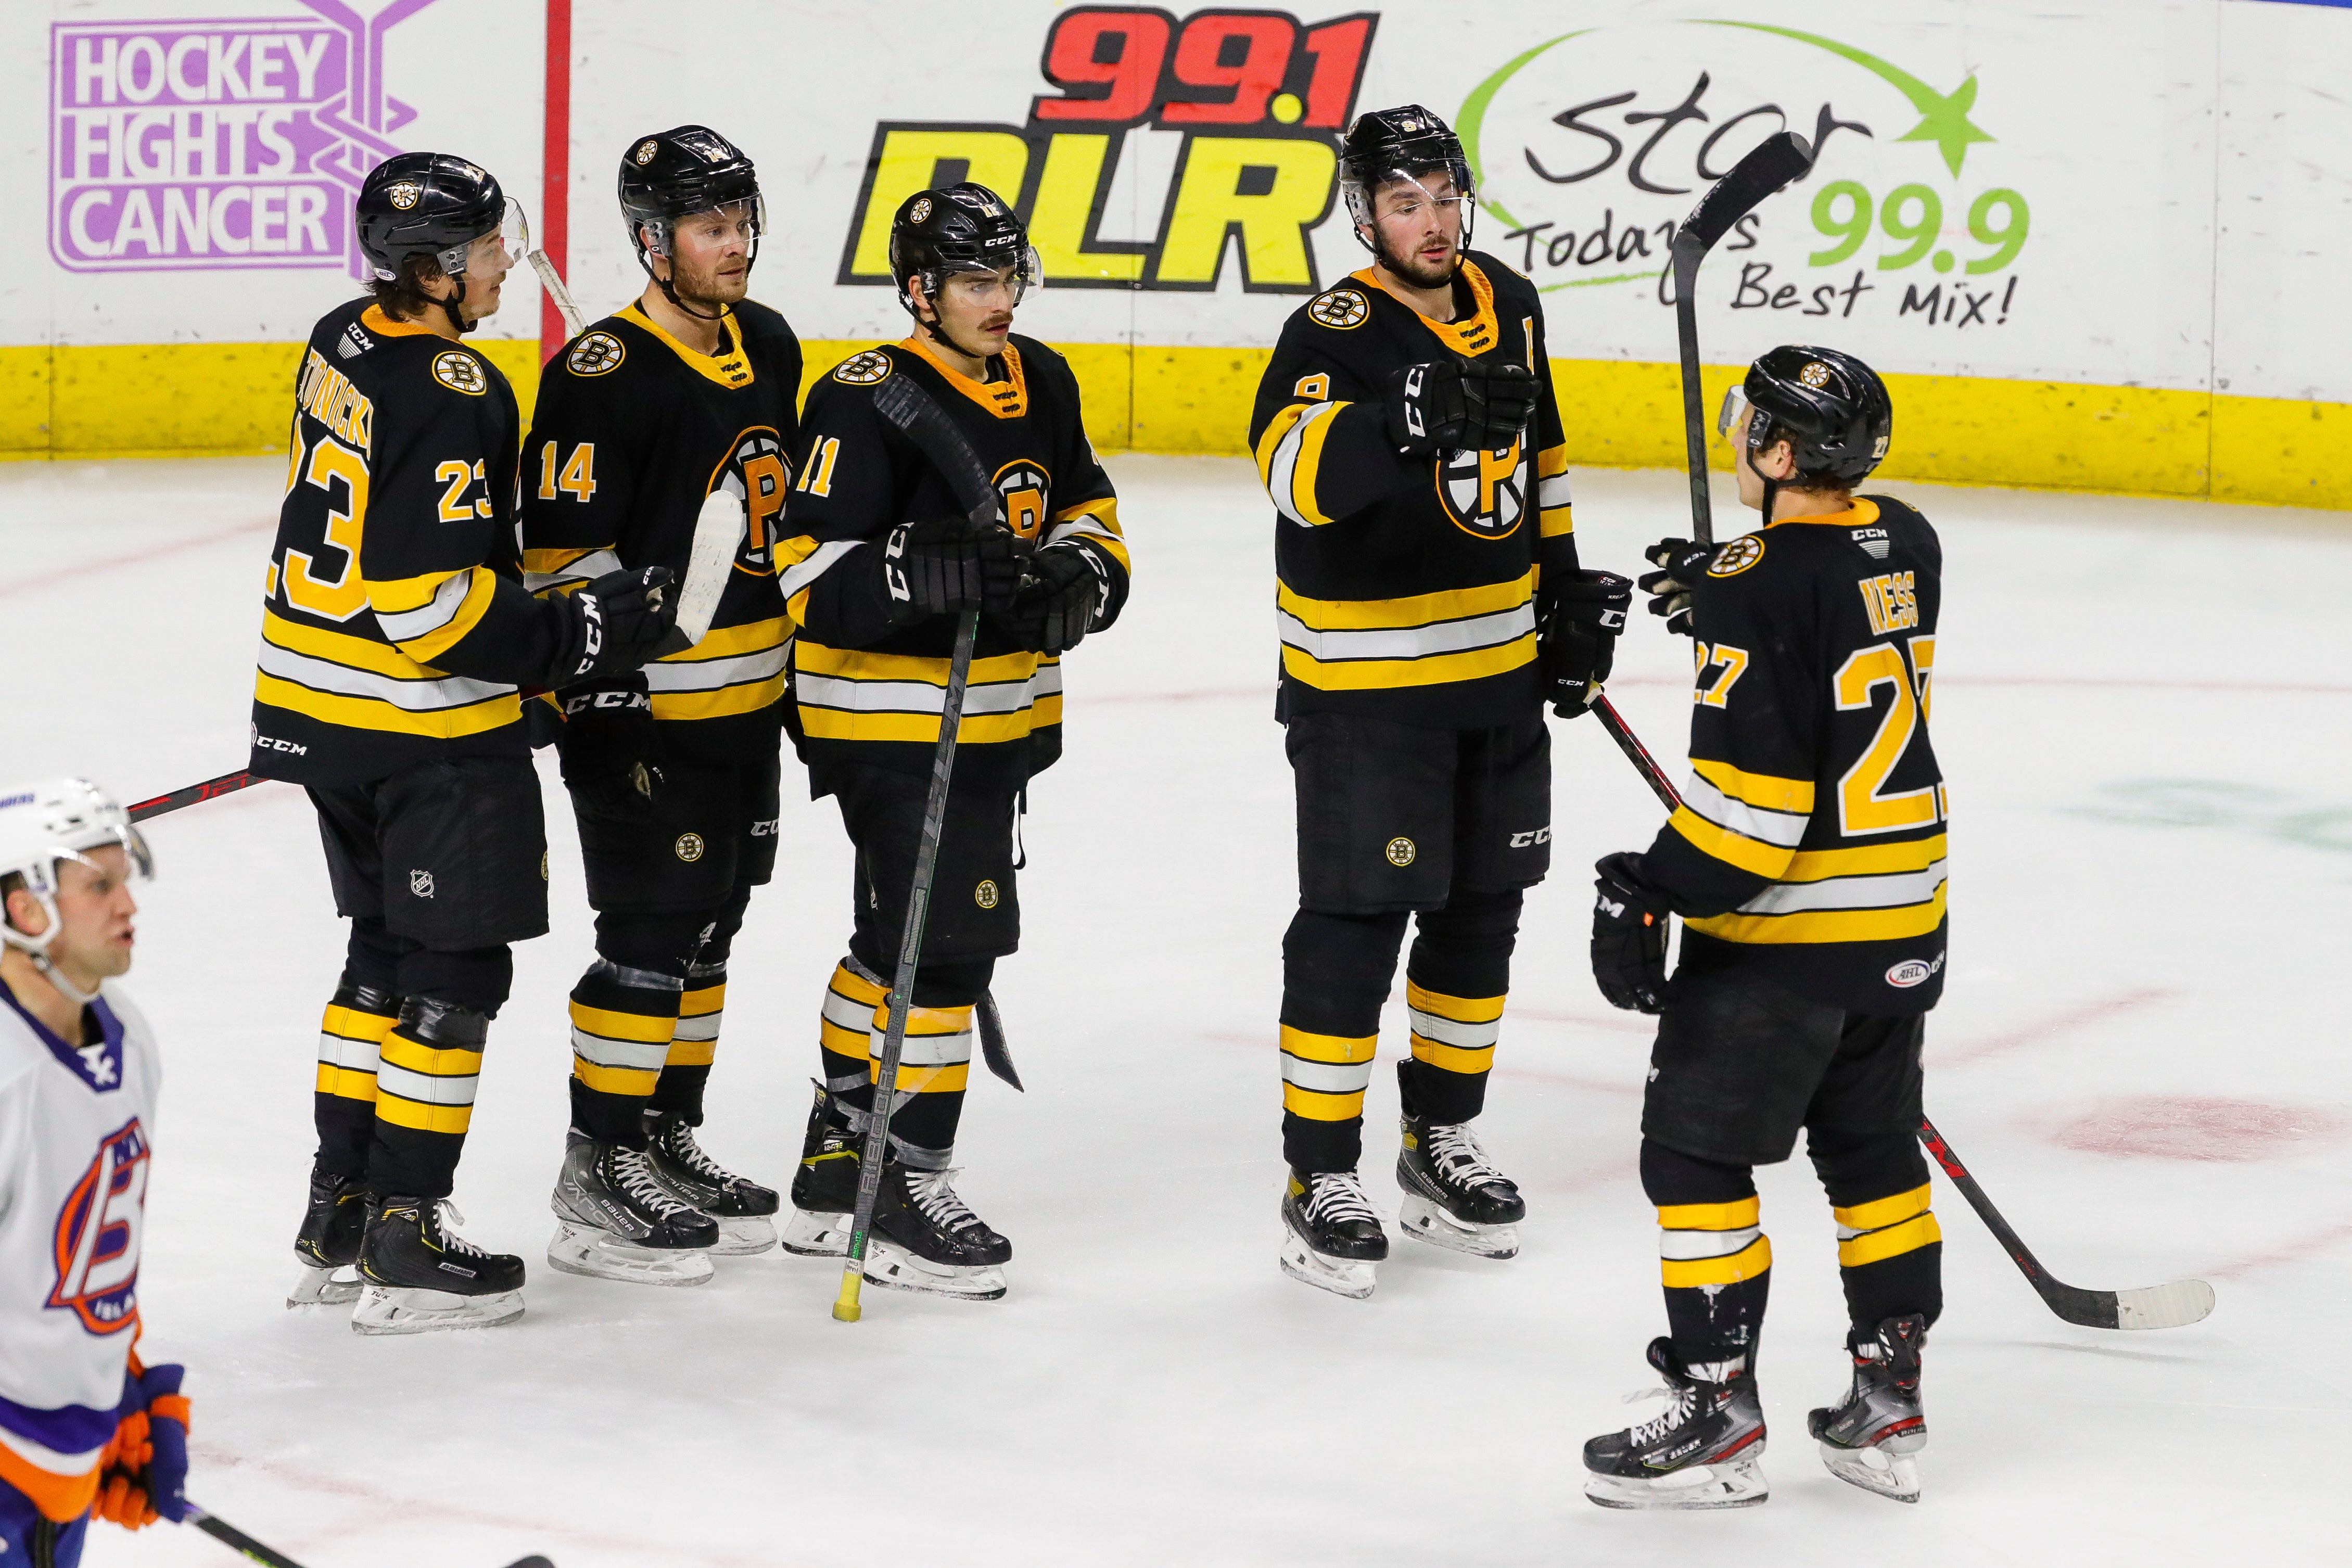 Islanders win 5-4 to take 3-2 lead in series over Bruins –